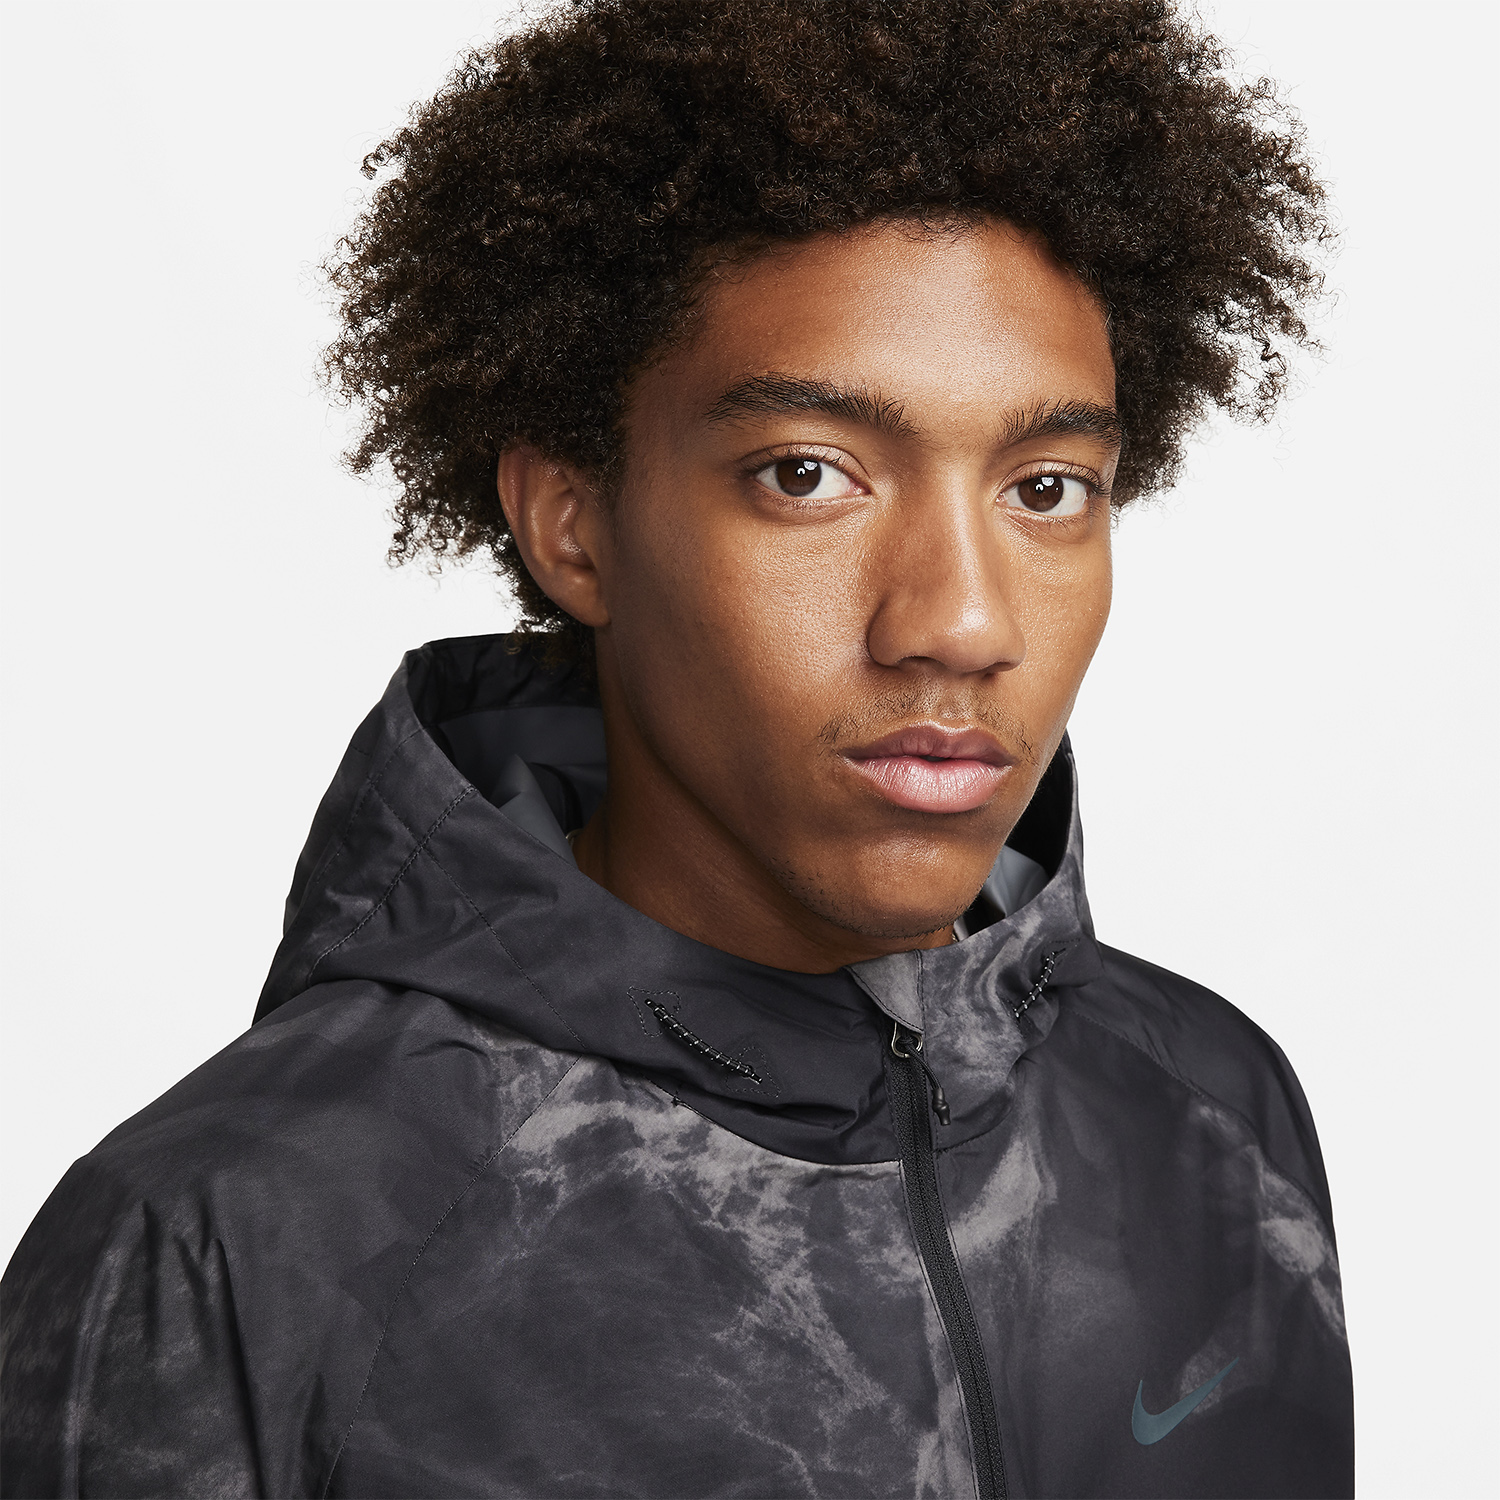 Nike Storm-FIT Run Division Jacket - Black/Black Reflective